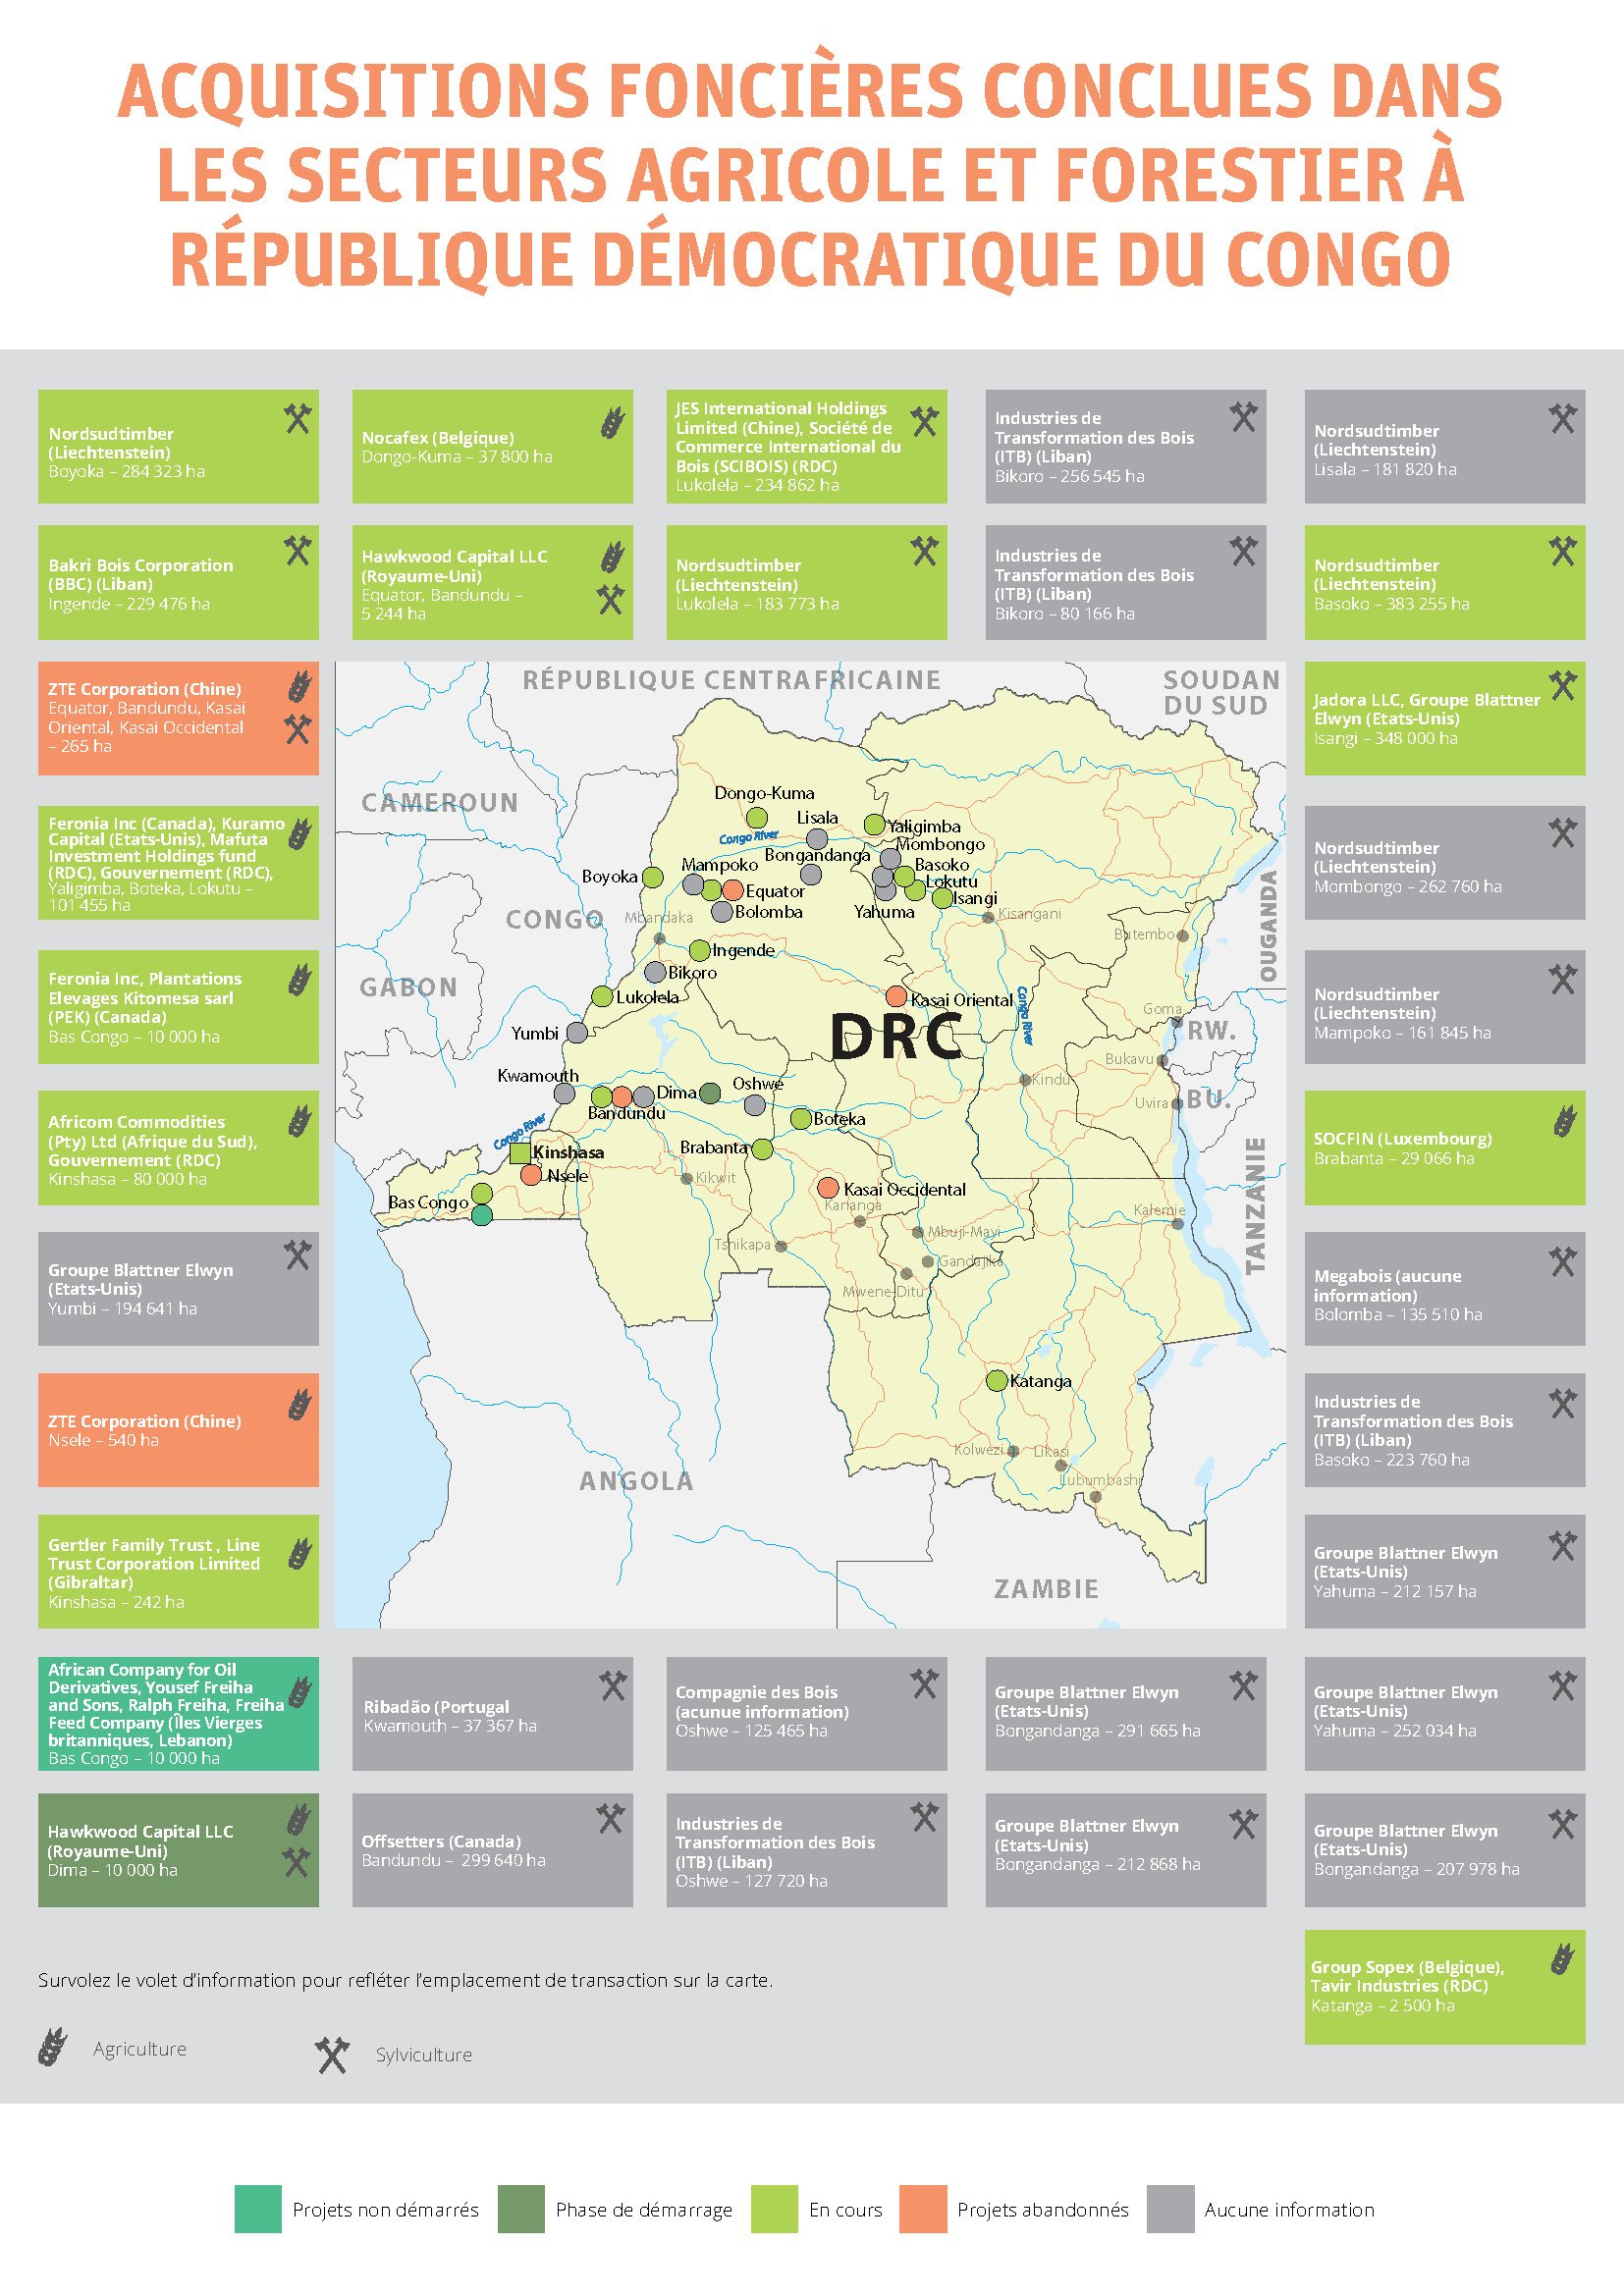 DRC Land Matrix cover image